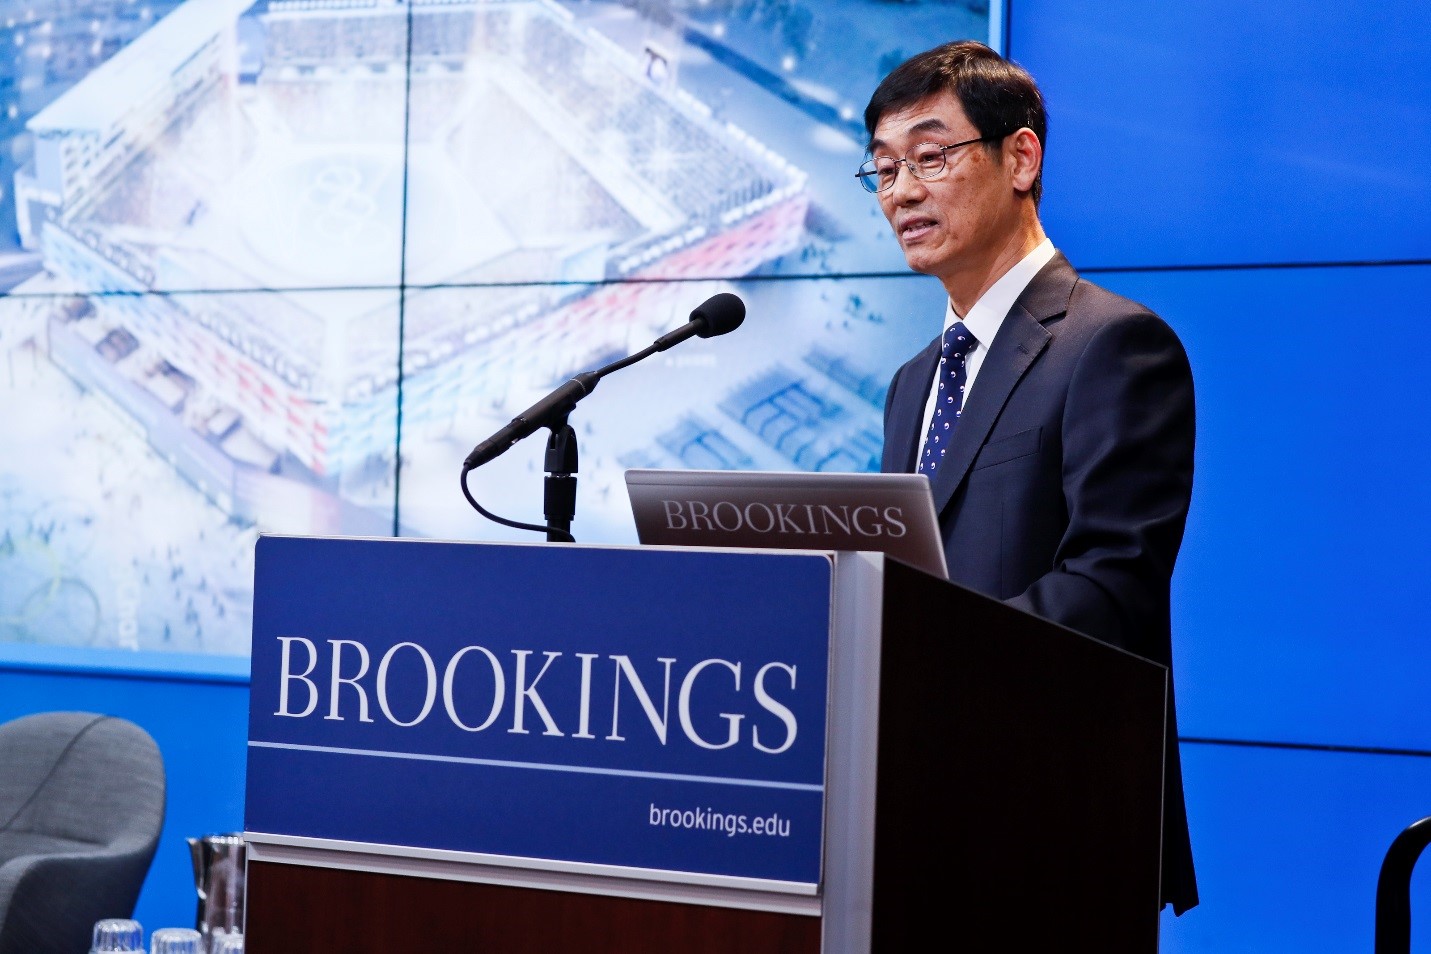 Director Yeong Gi Mun, South Korea’s chief of the Counterterrorism Center